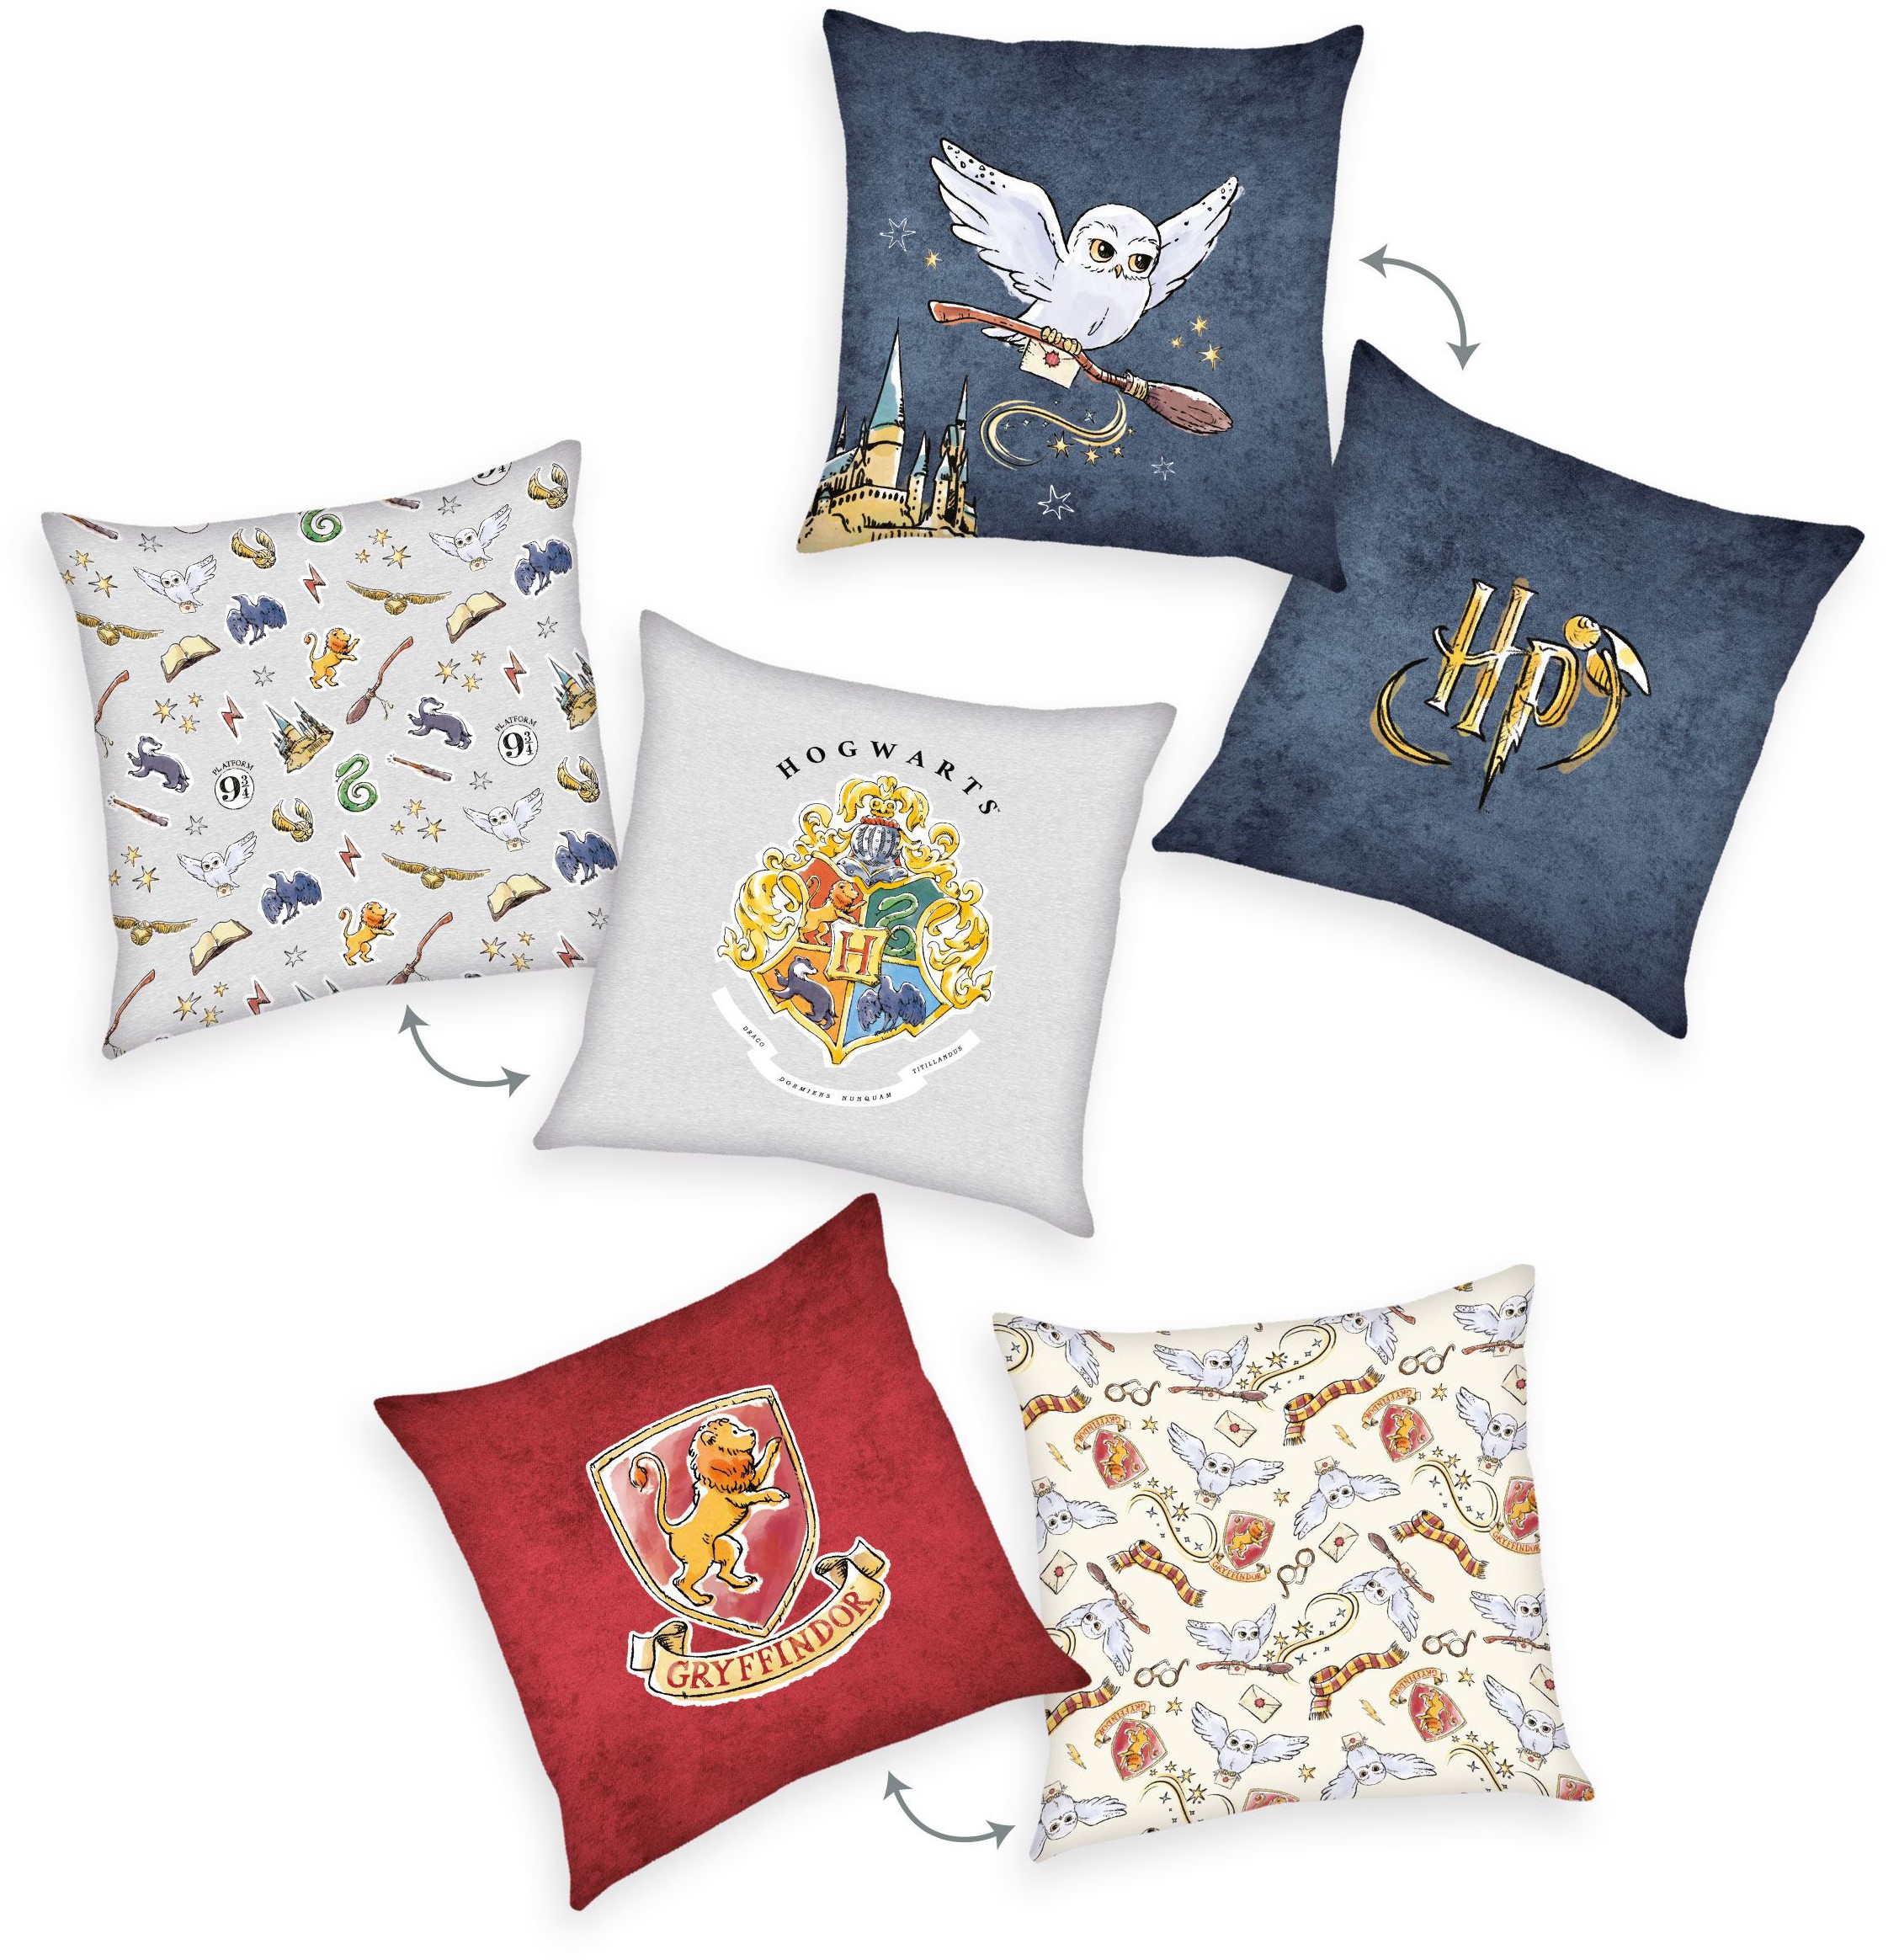 Harry Potter - Harry Potter Pillows 3-Pack - 40 x 40 cm